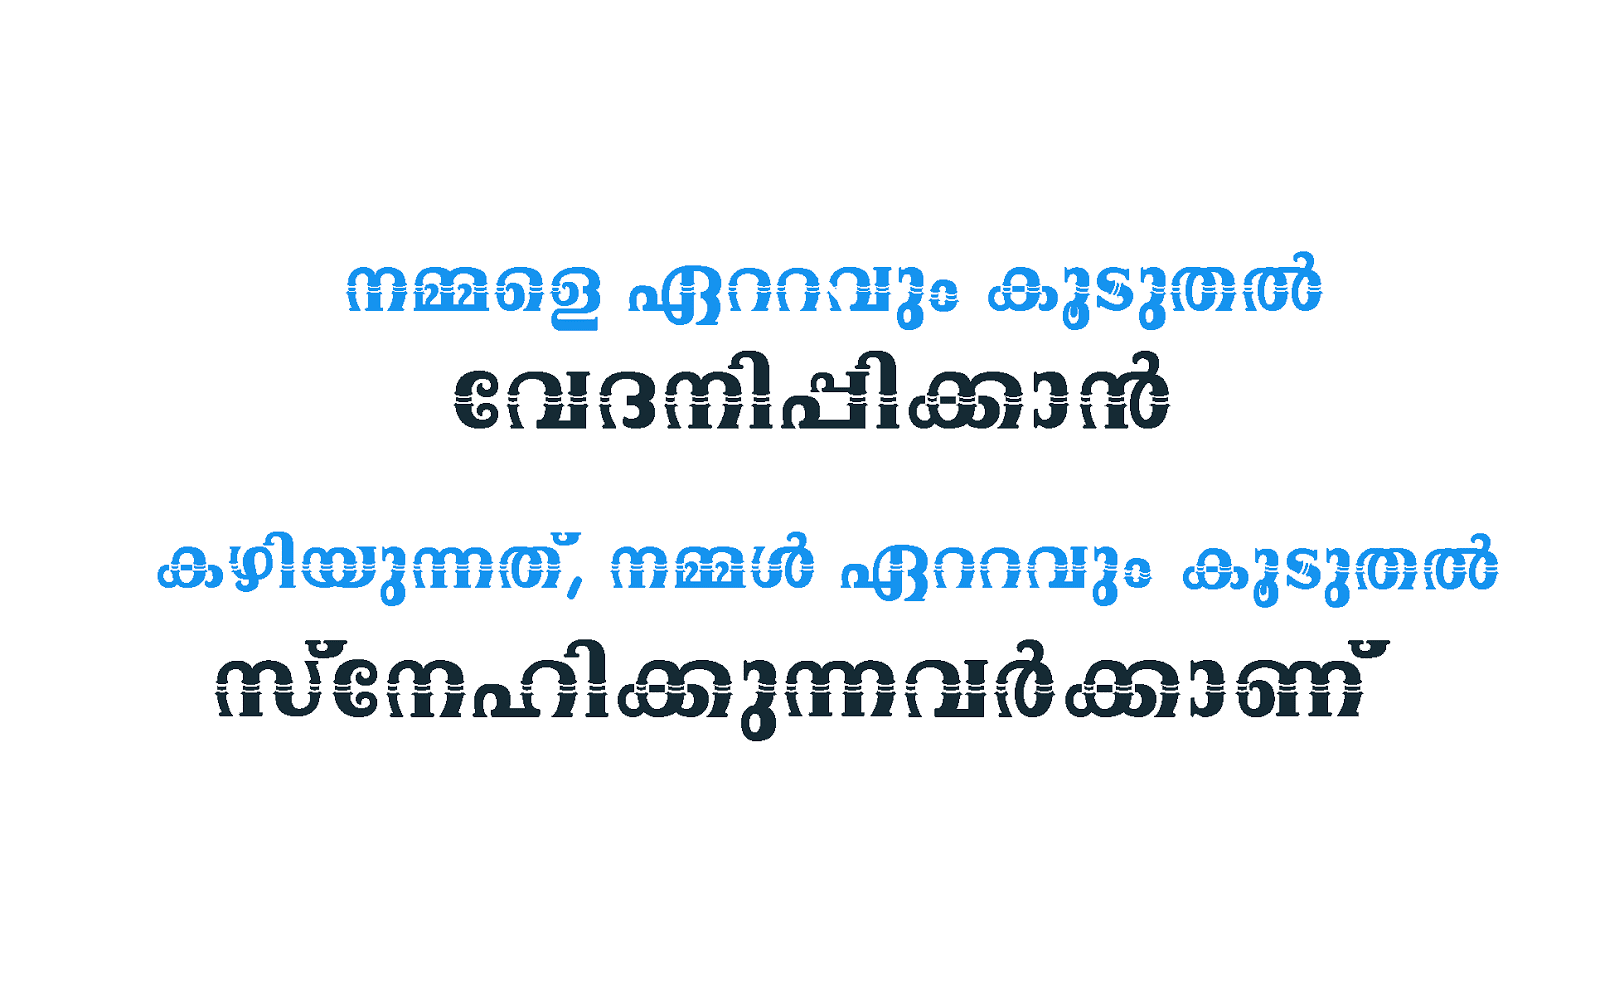 sad love quotes malayalam nammale ettavum kooduthal vedanippikkaan% People speaking Malayalam look for quotes